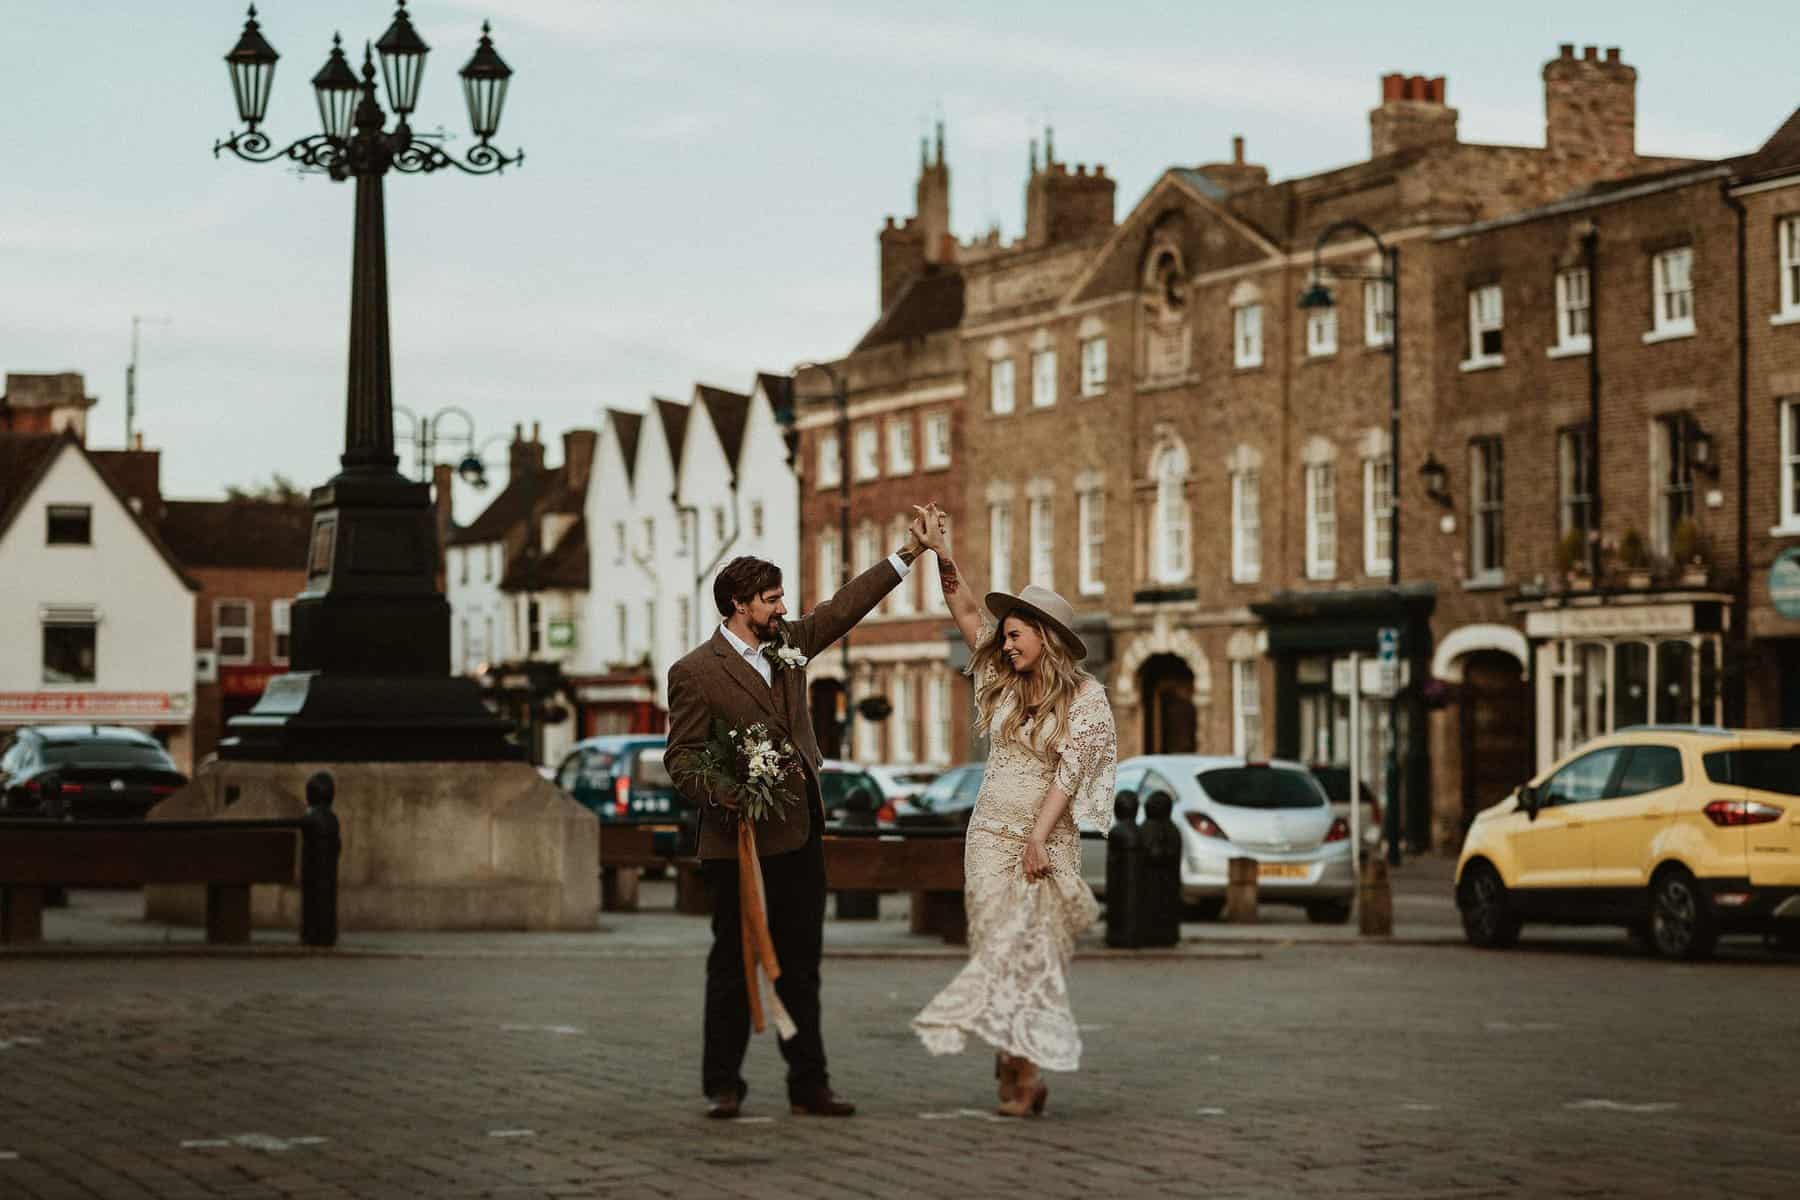 dancing in the street an elopement wedding